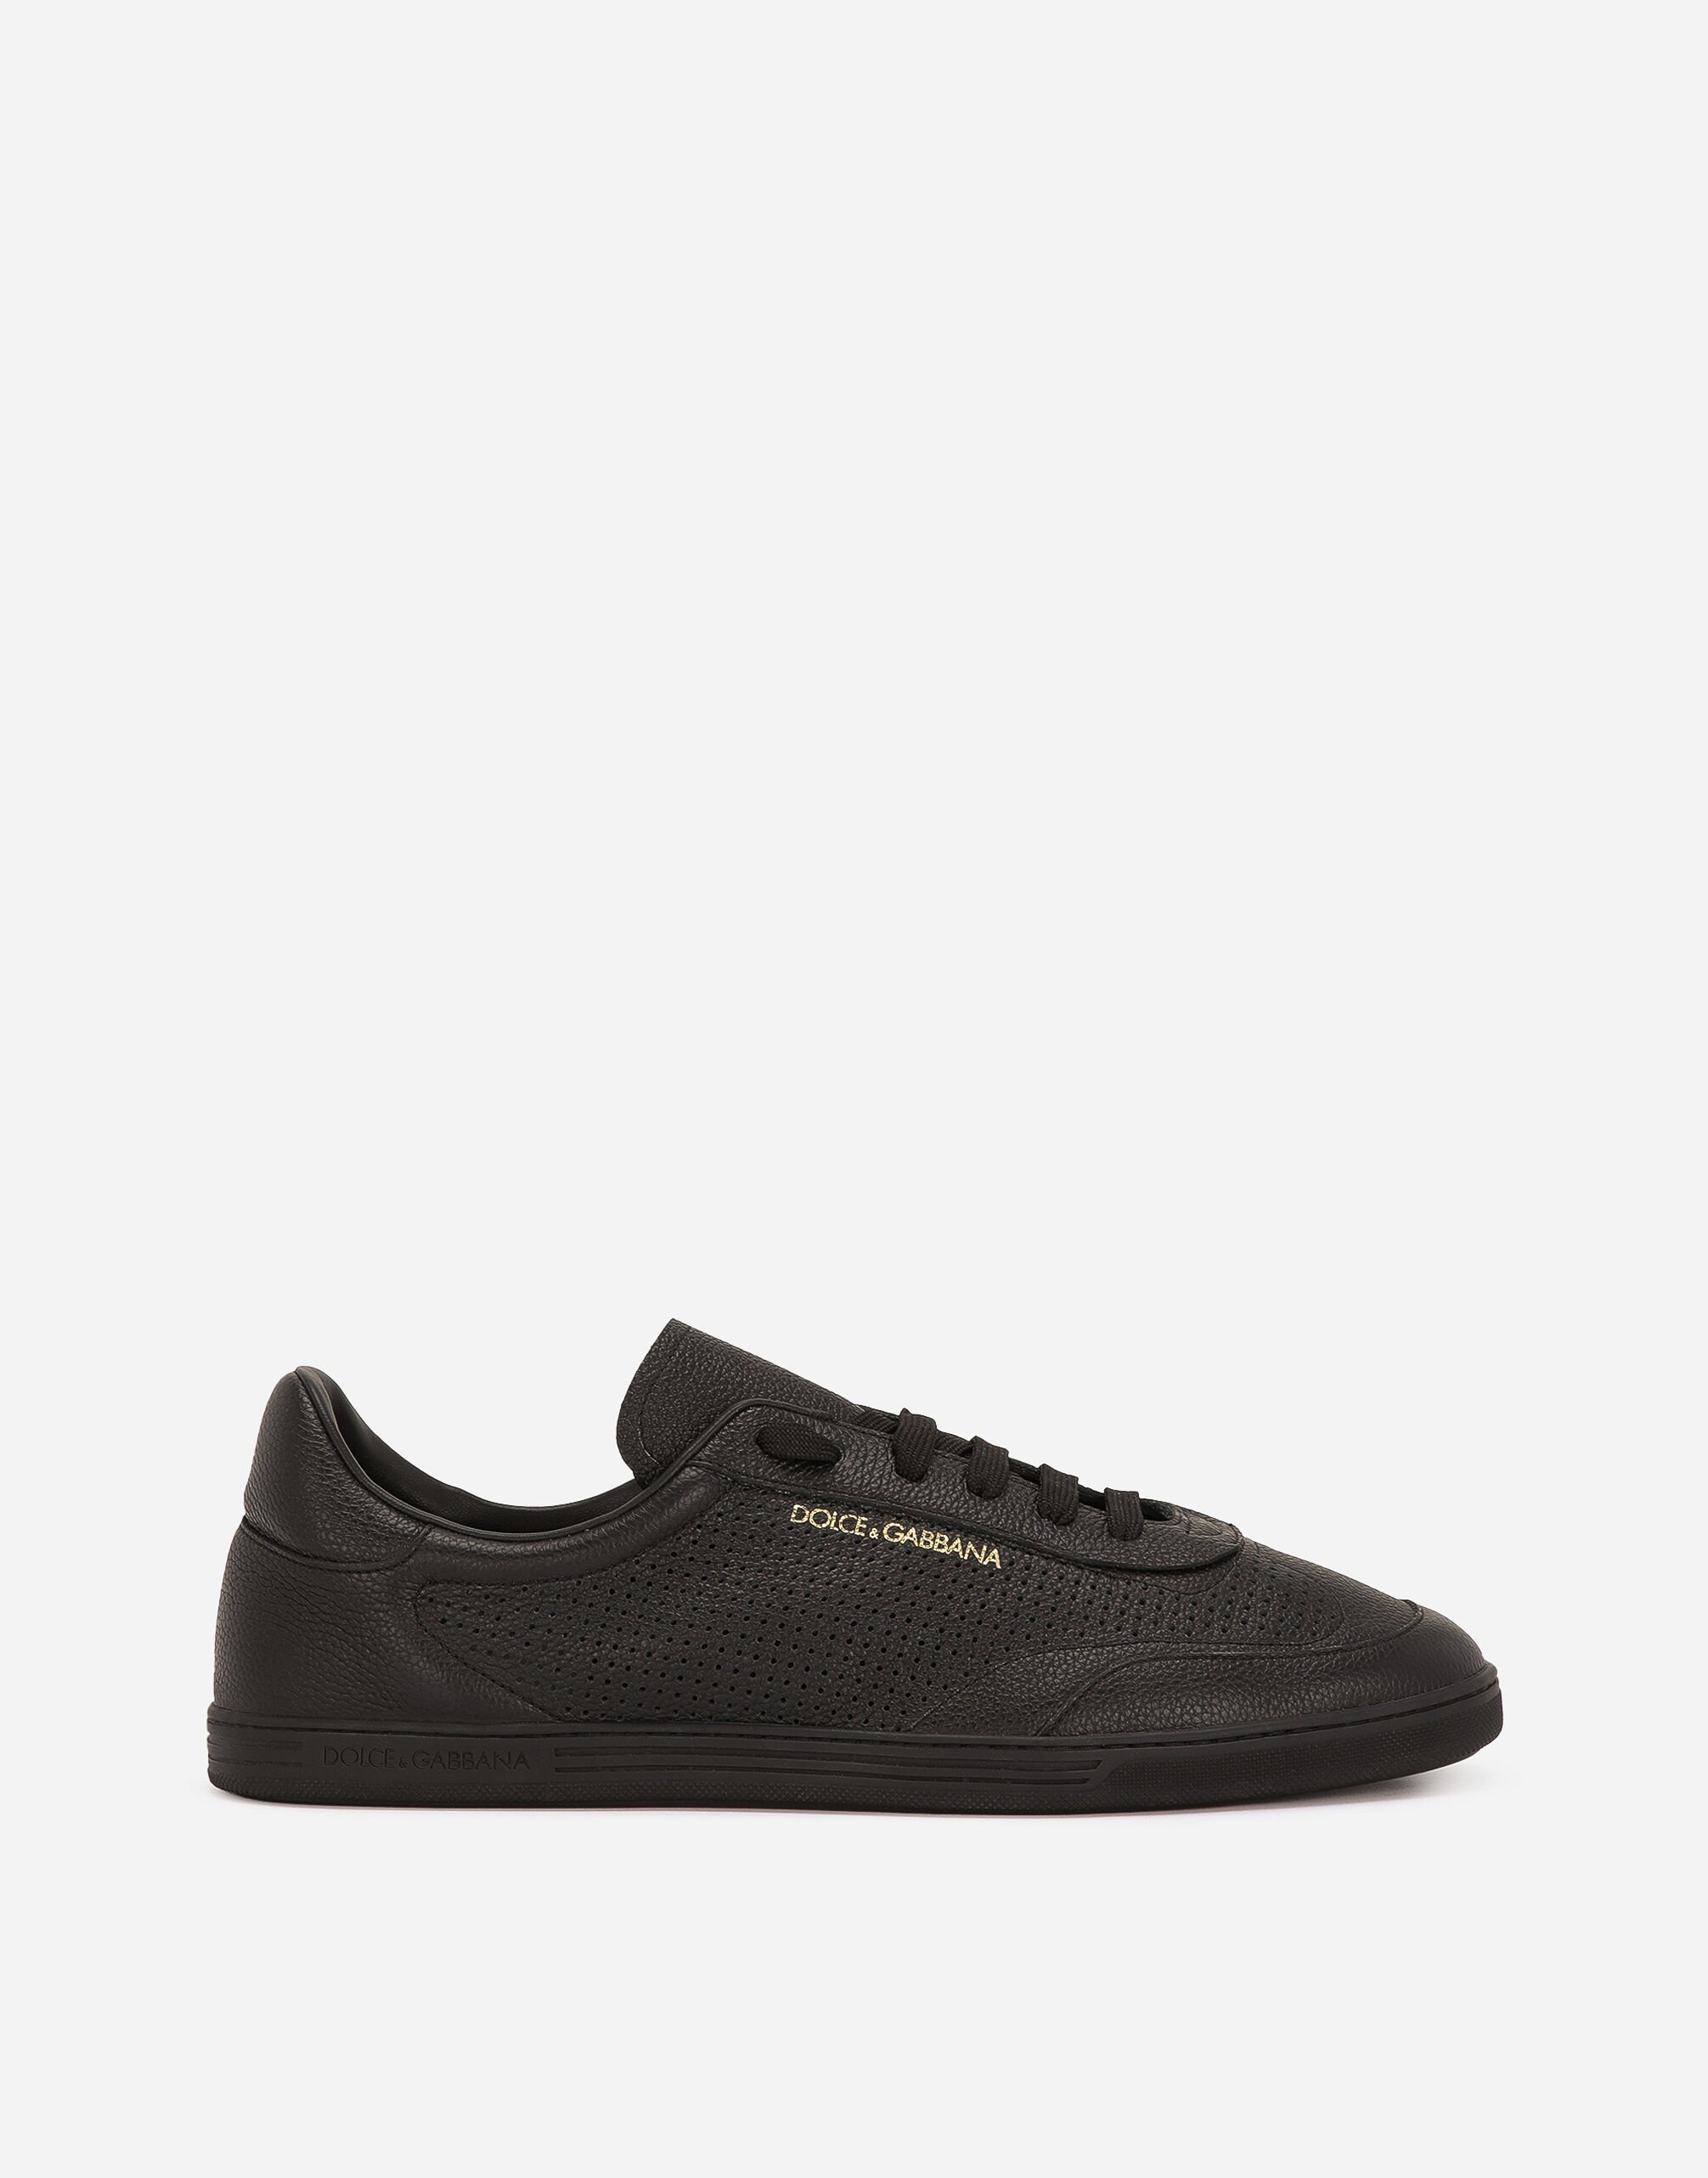 Dolce & Gabbana Perforated calfskin Saint Tropez sneakers Black A80440AO602